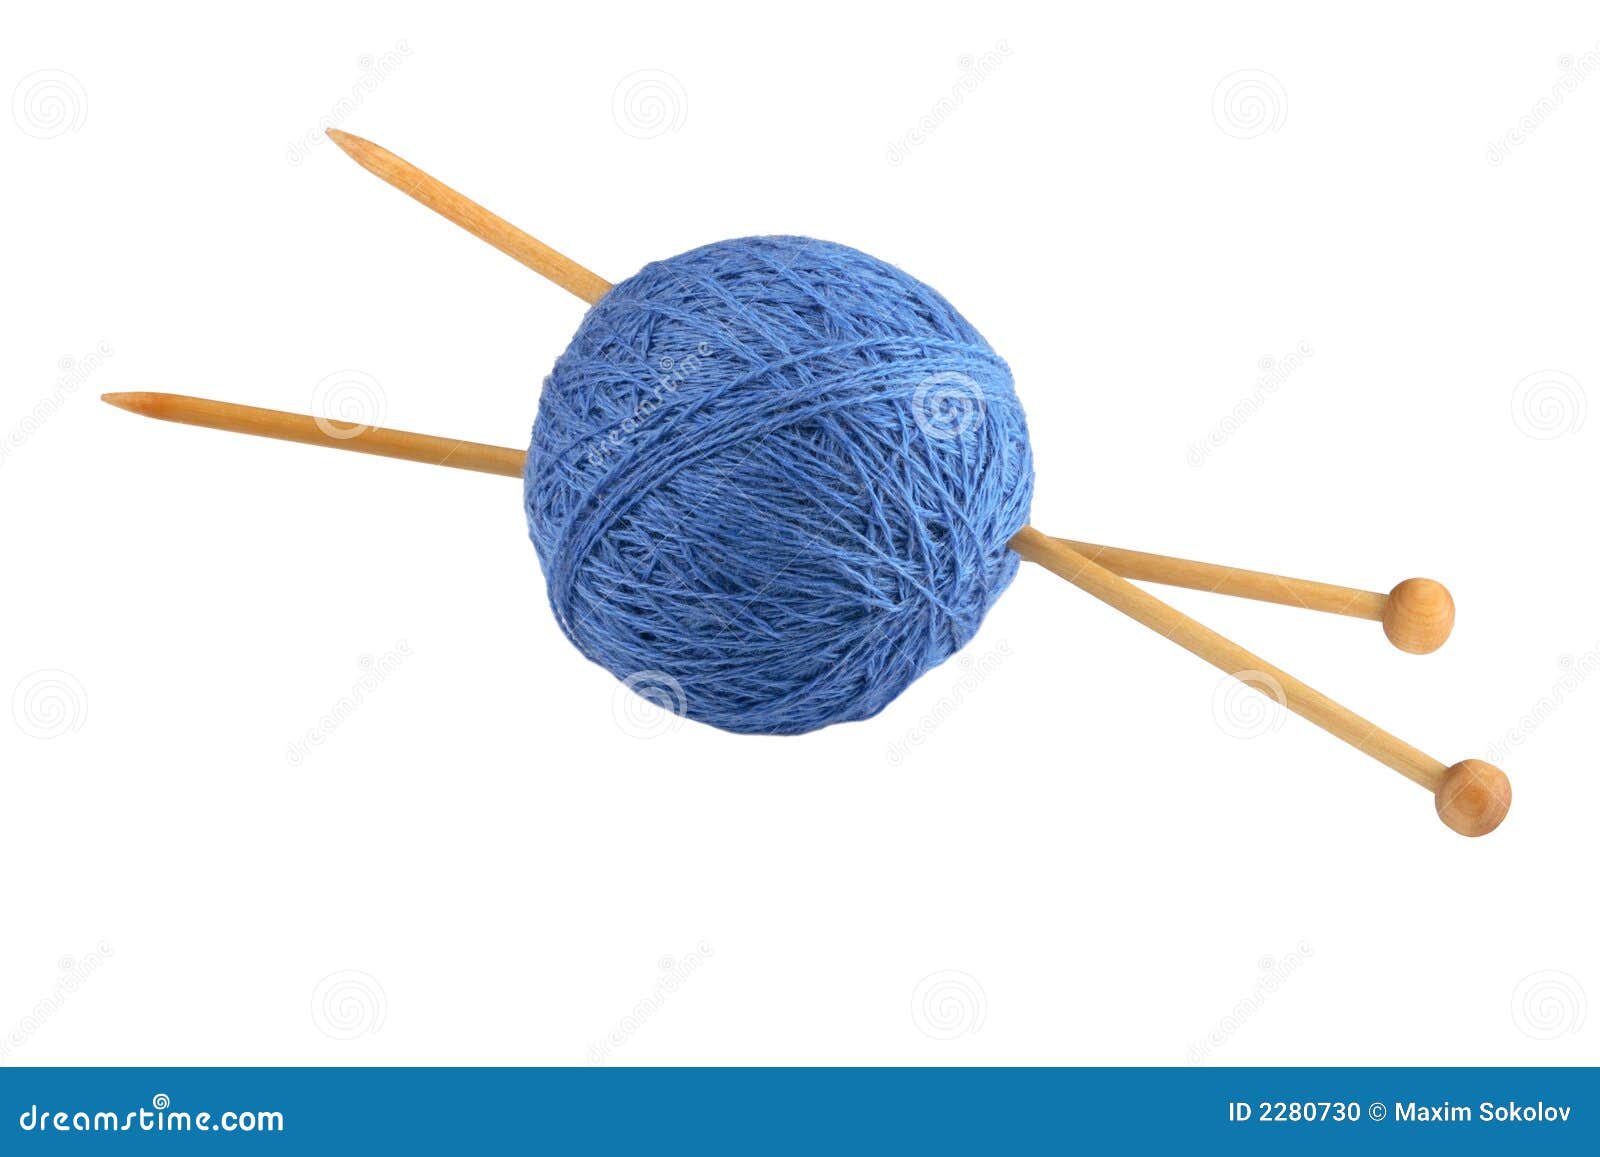 knitting needles and yarn clip art - photo #50